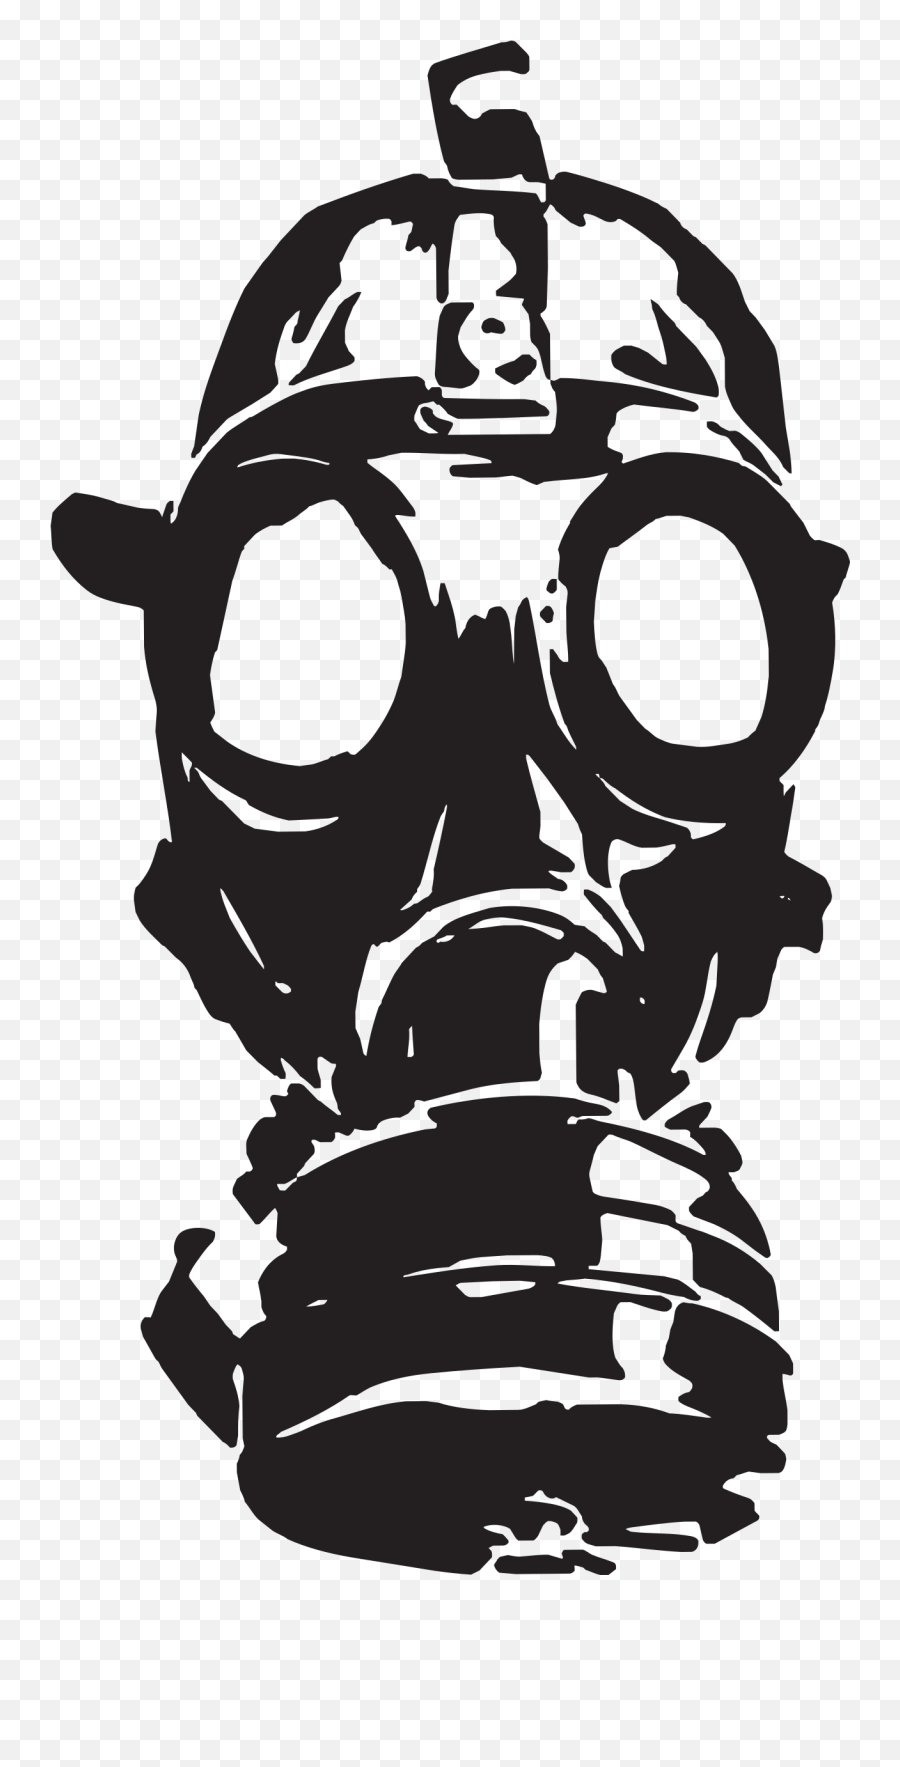 Gas Mask Png Image - Gas Mask Clip Art,Black Mask Png